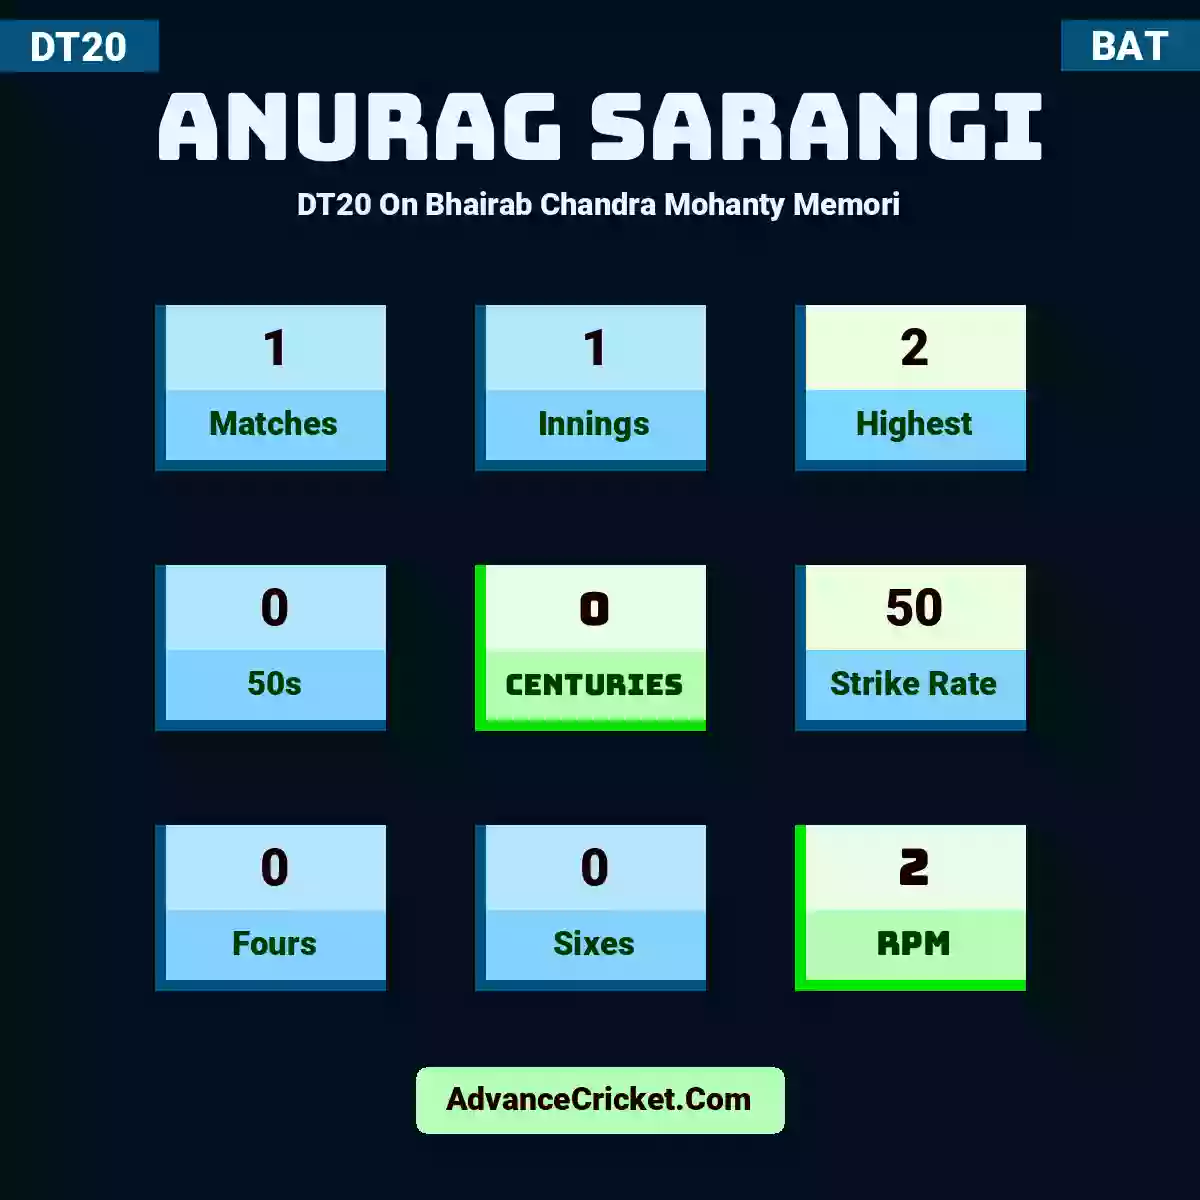 Anurag Sarangi DT20  On Bhairab Chandra Mohanty Memori, Anurag Sarangi played 1 matches, scored 2 runs as highest, 0 half-centuries, and 0 centuries, with a strike rate of 50. A.Sarangi hit 0 fours and 0 sixes, with an RPM of 2.